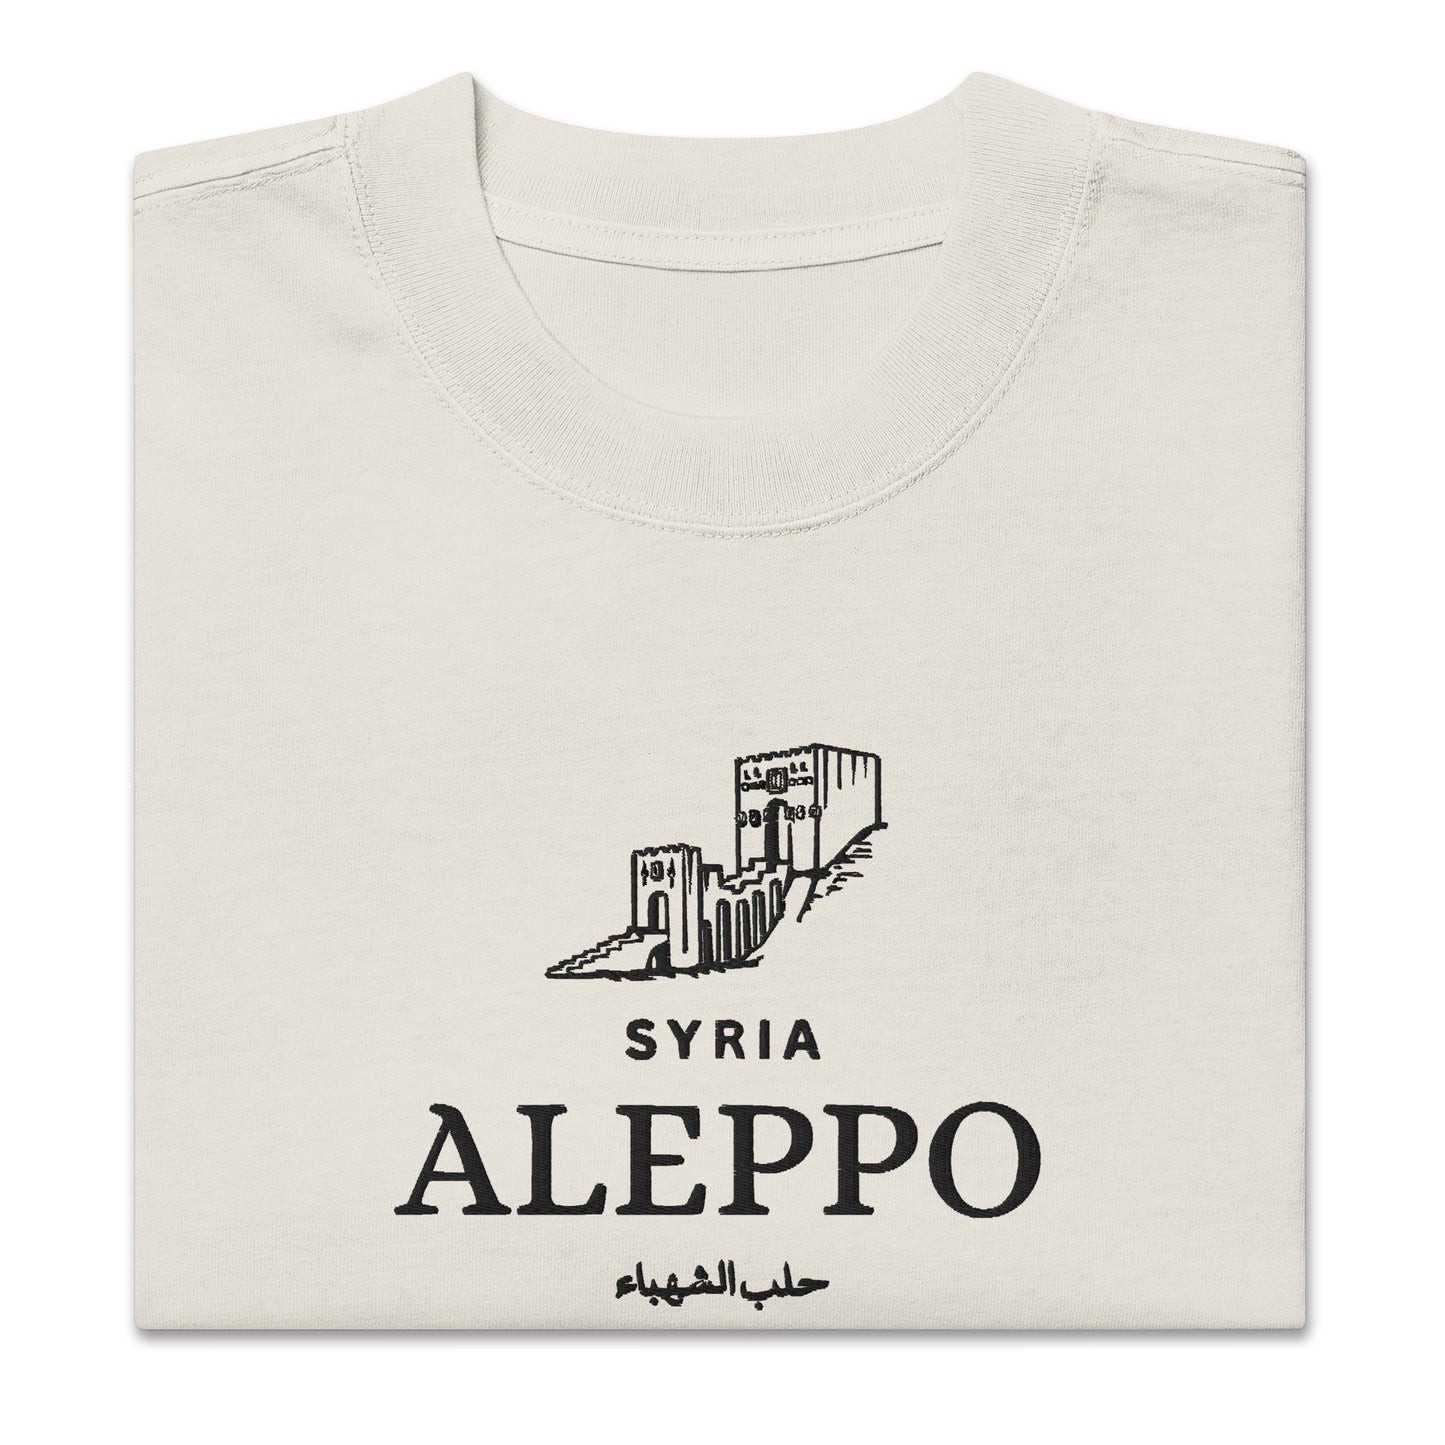 Oversized Aleppo Light faded t-shirt